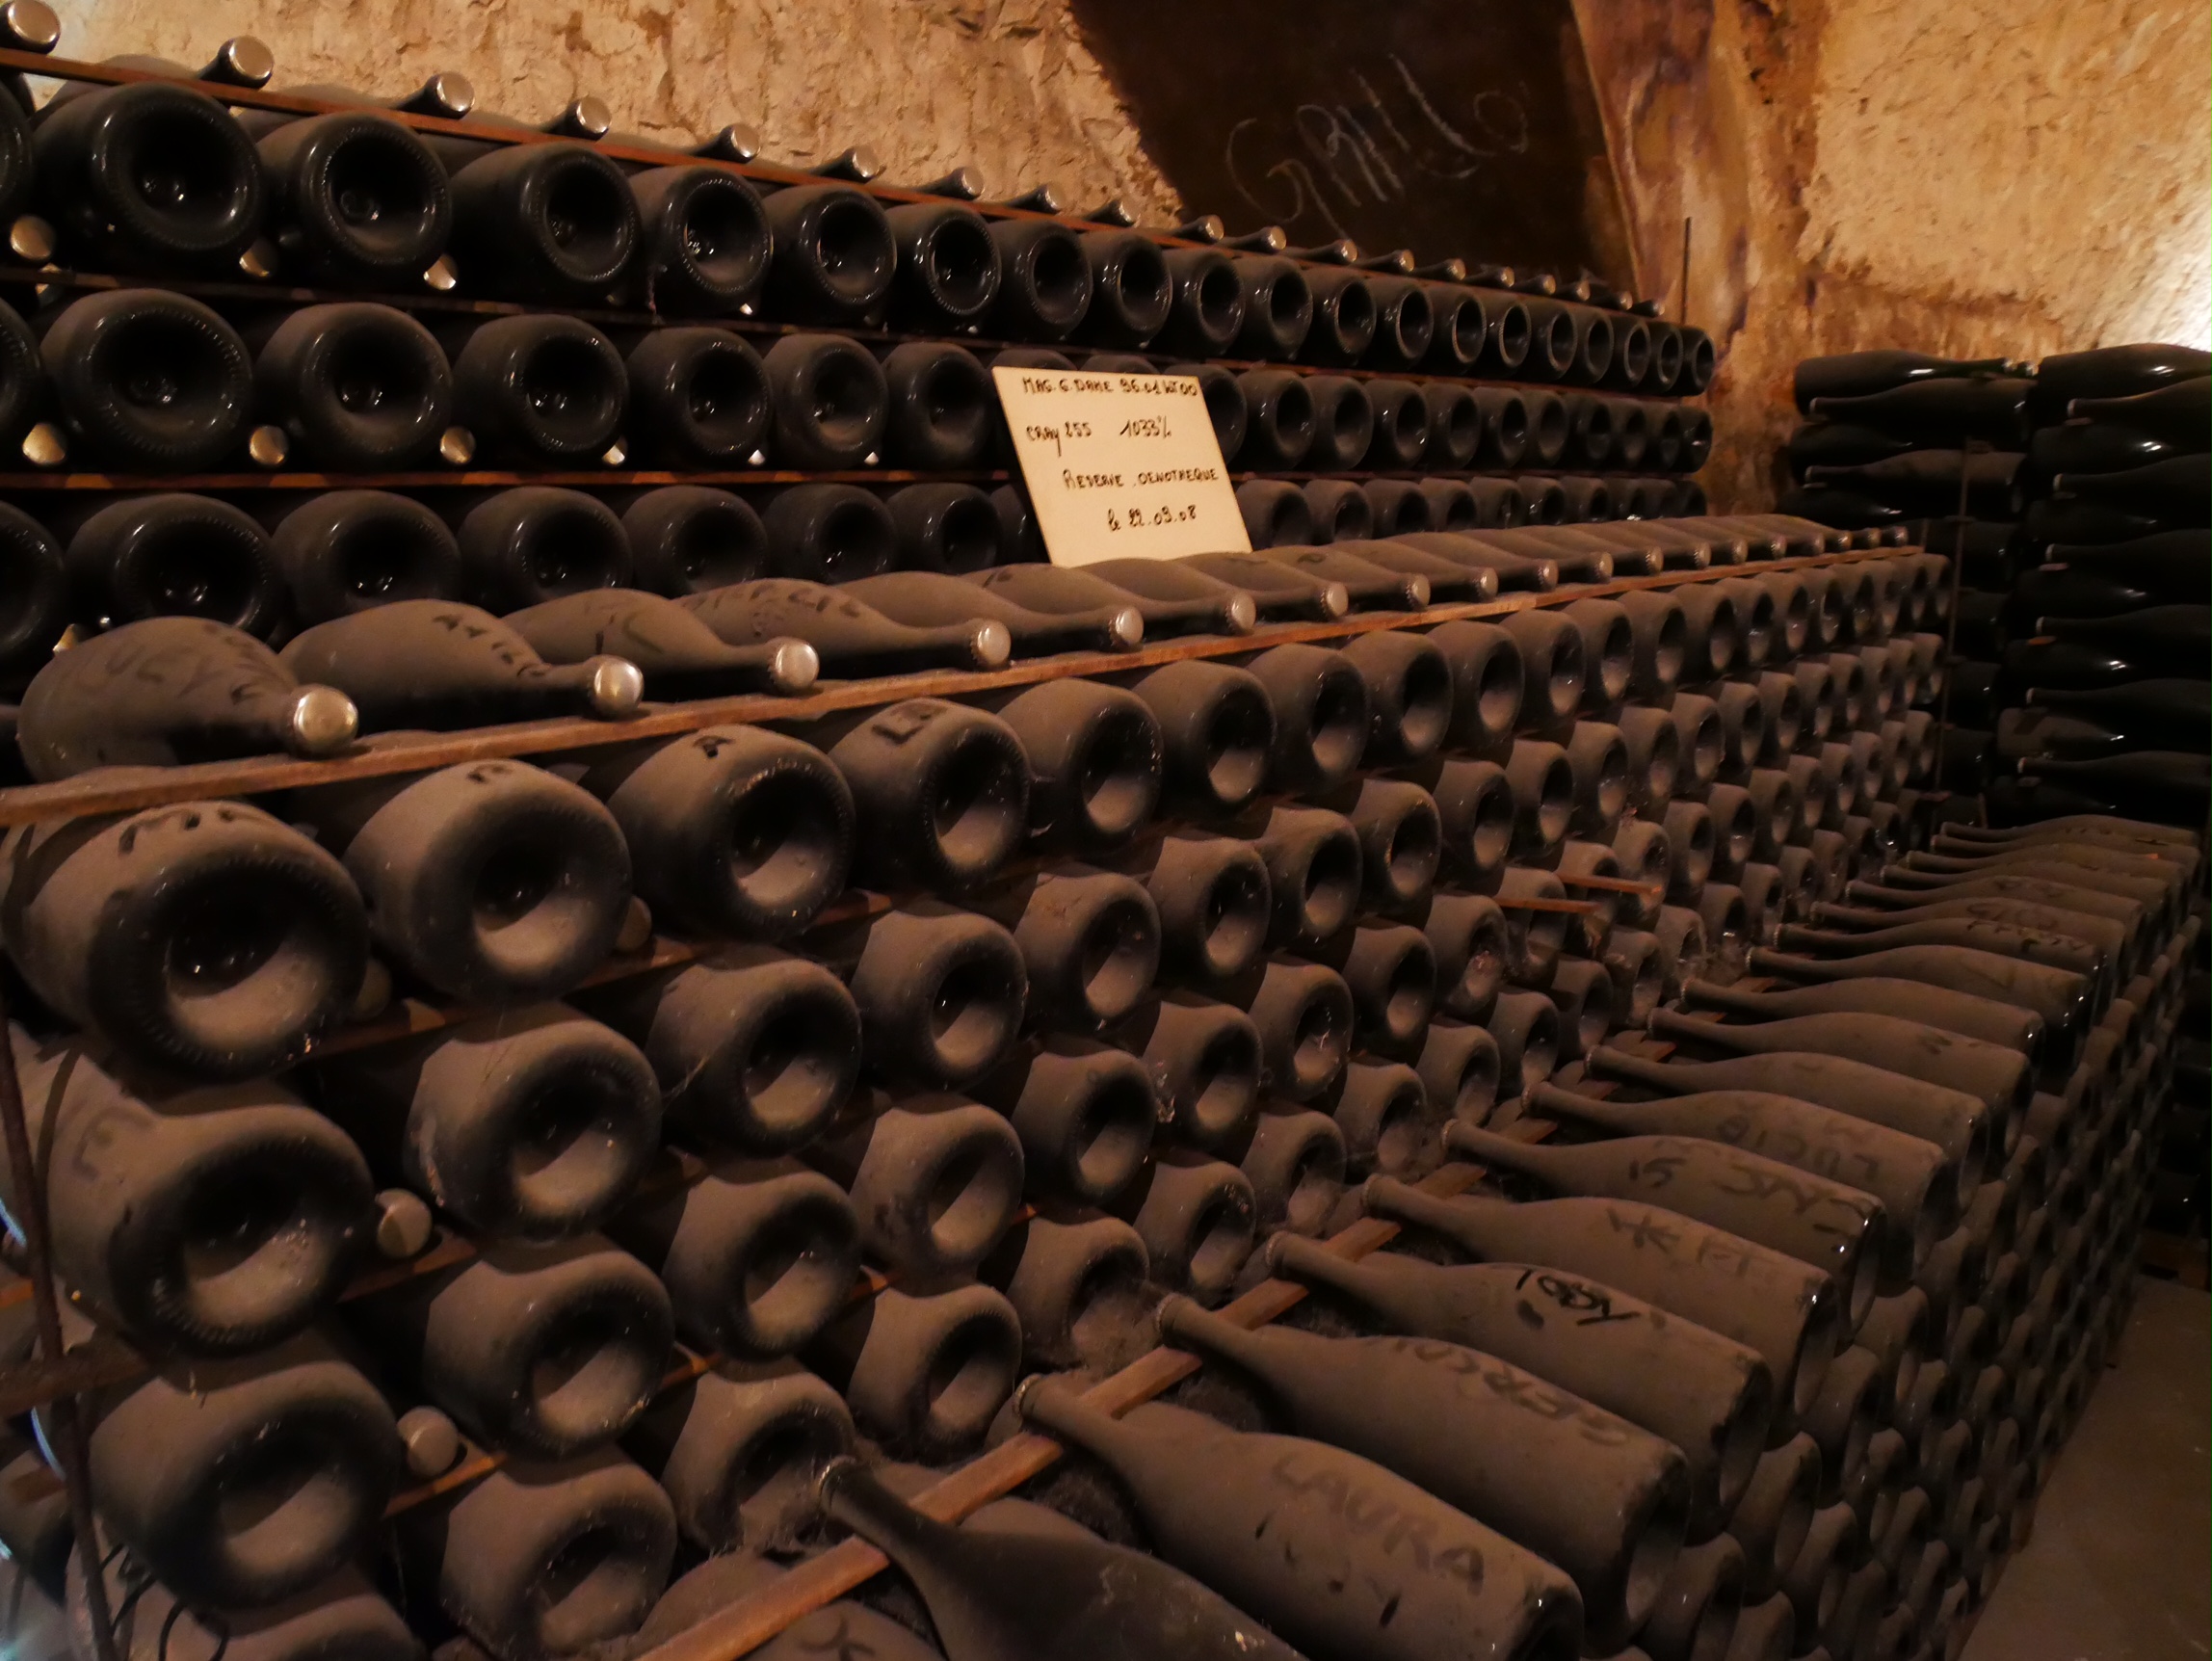 Maison Veuve Clicquot Old Bottles in Dust - Cave and Vineyard Visit - Reims - Champagne Region - France